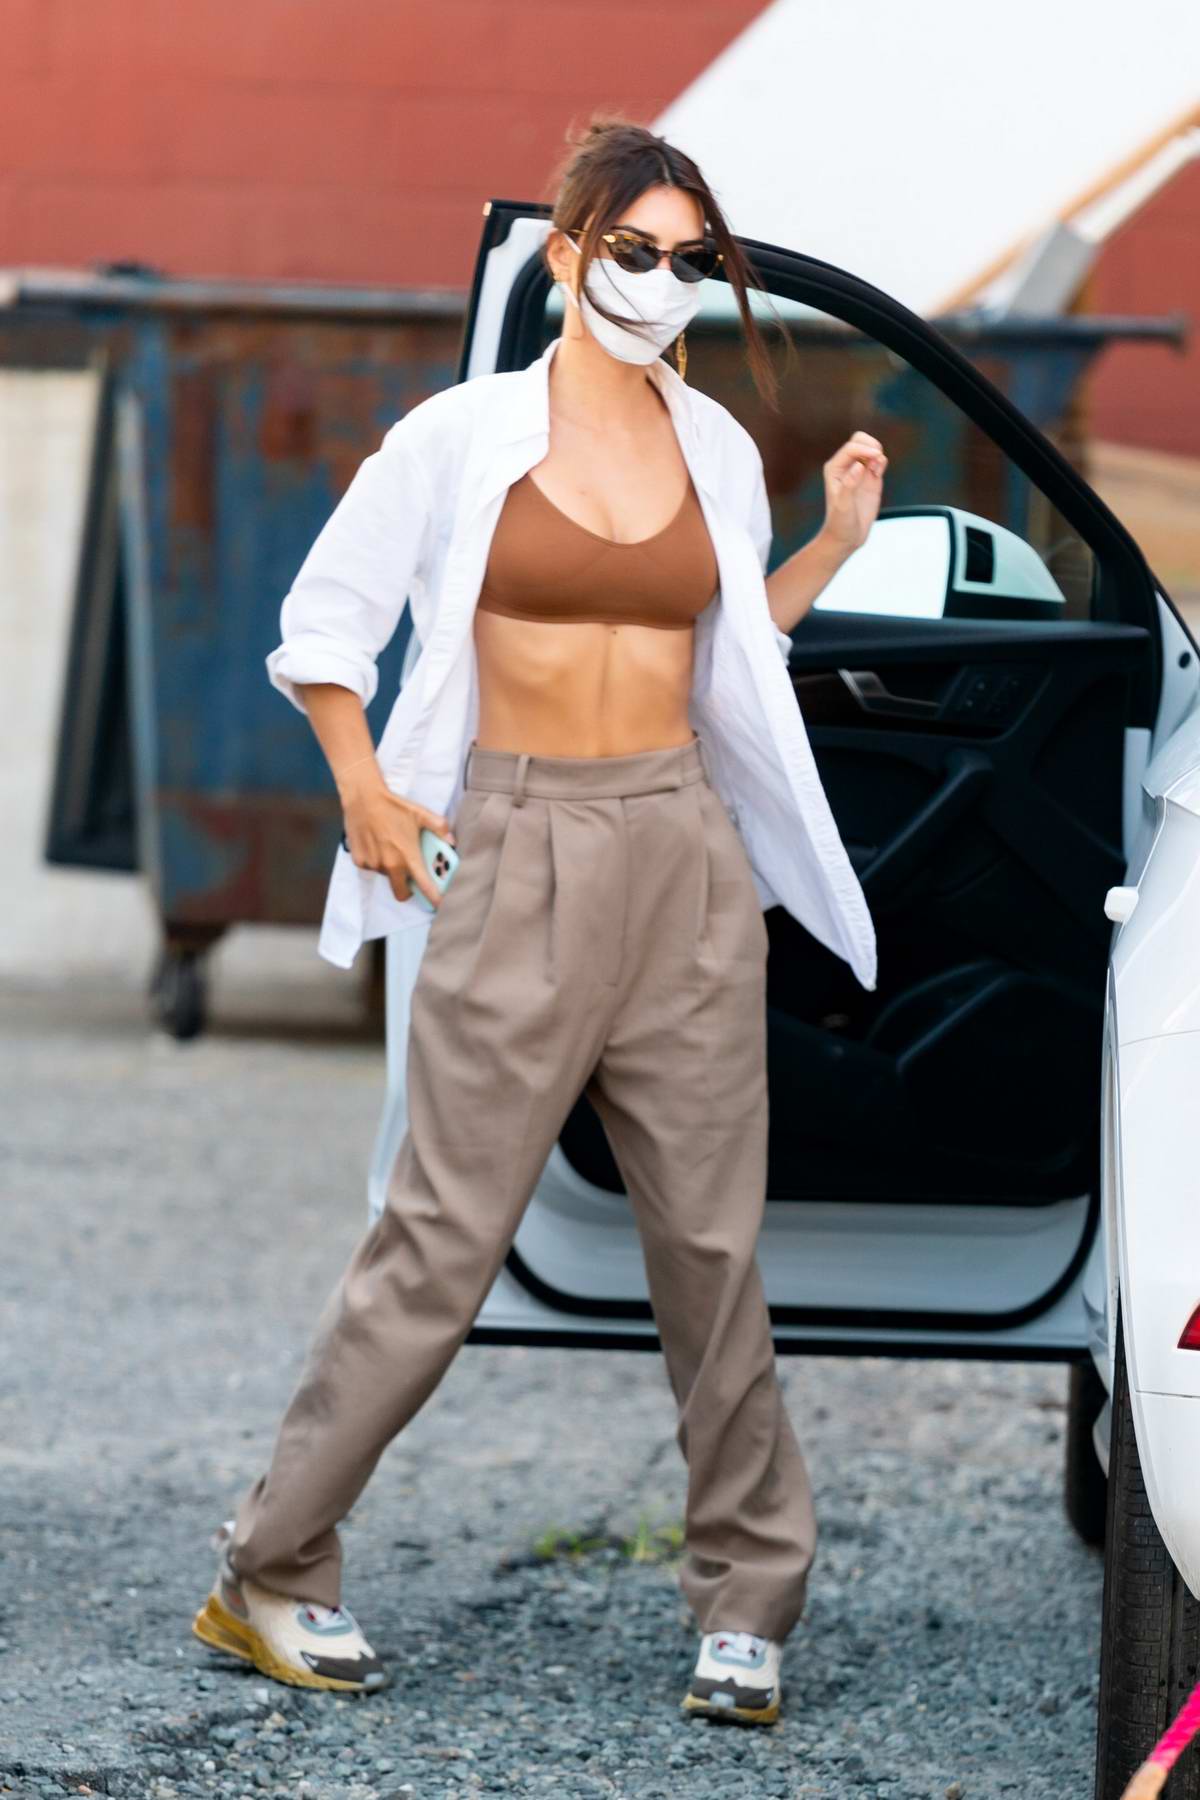 Emily Ratajkowski rocks a white shirt over a sports bra while heading out  with a friend